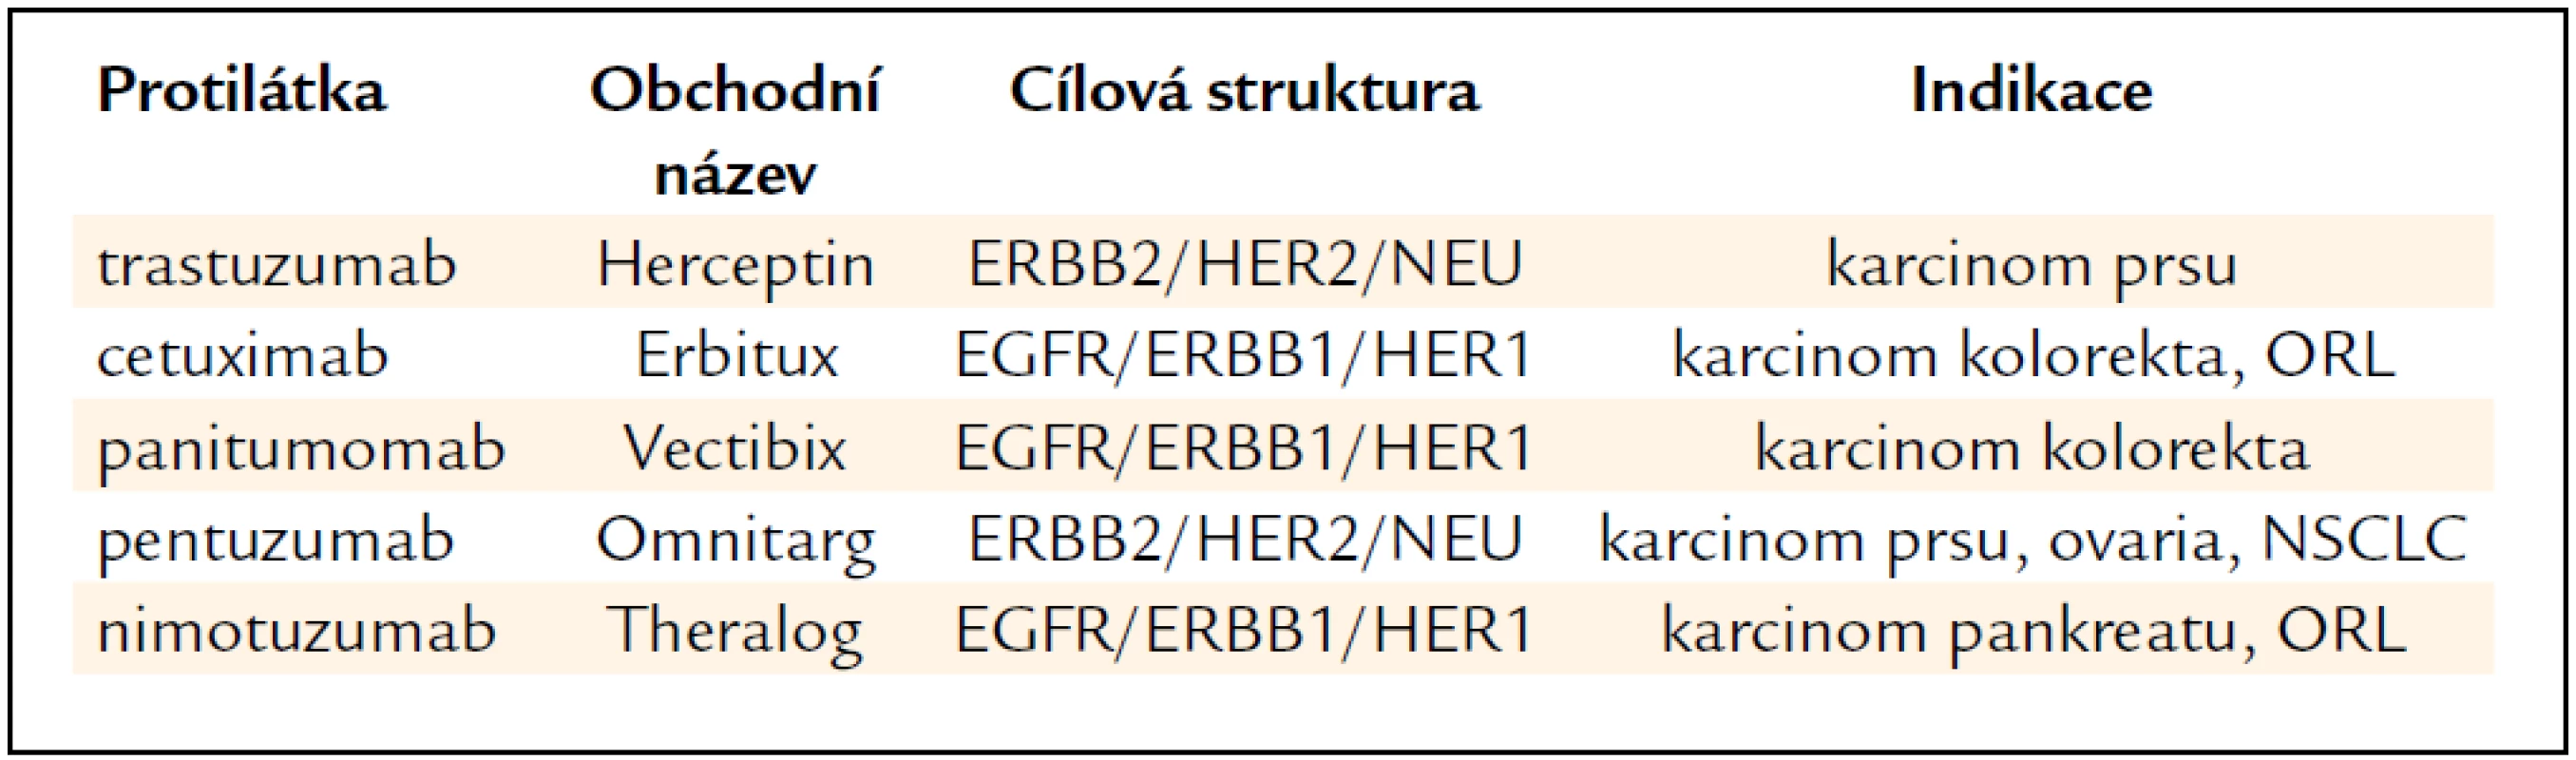 Protilátky proti receptorům EGFR/ERBB/HER.